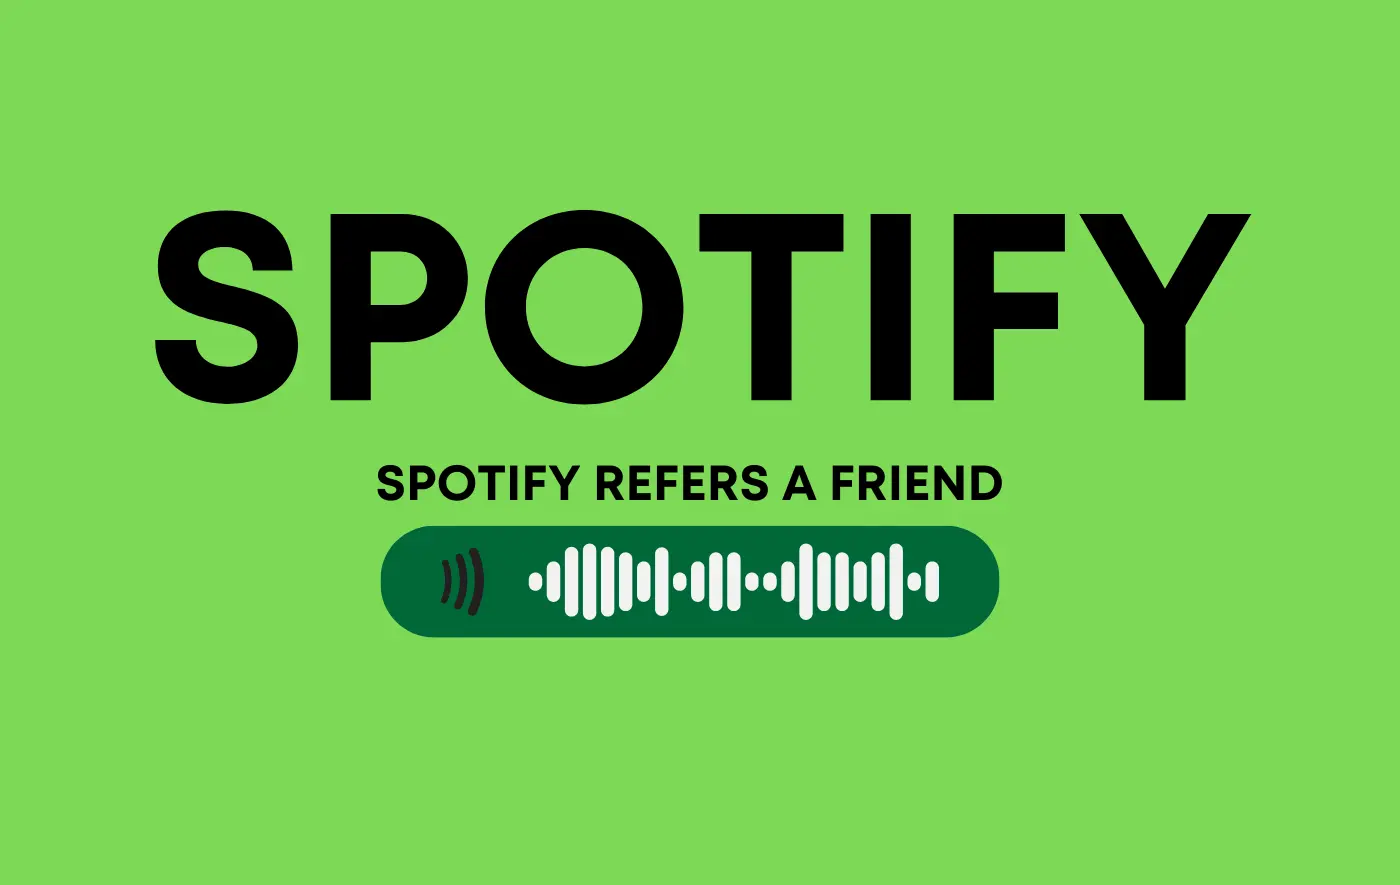 Spotify refers a friend